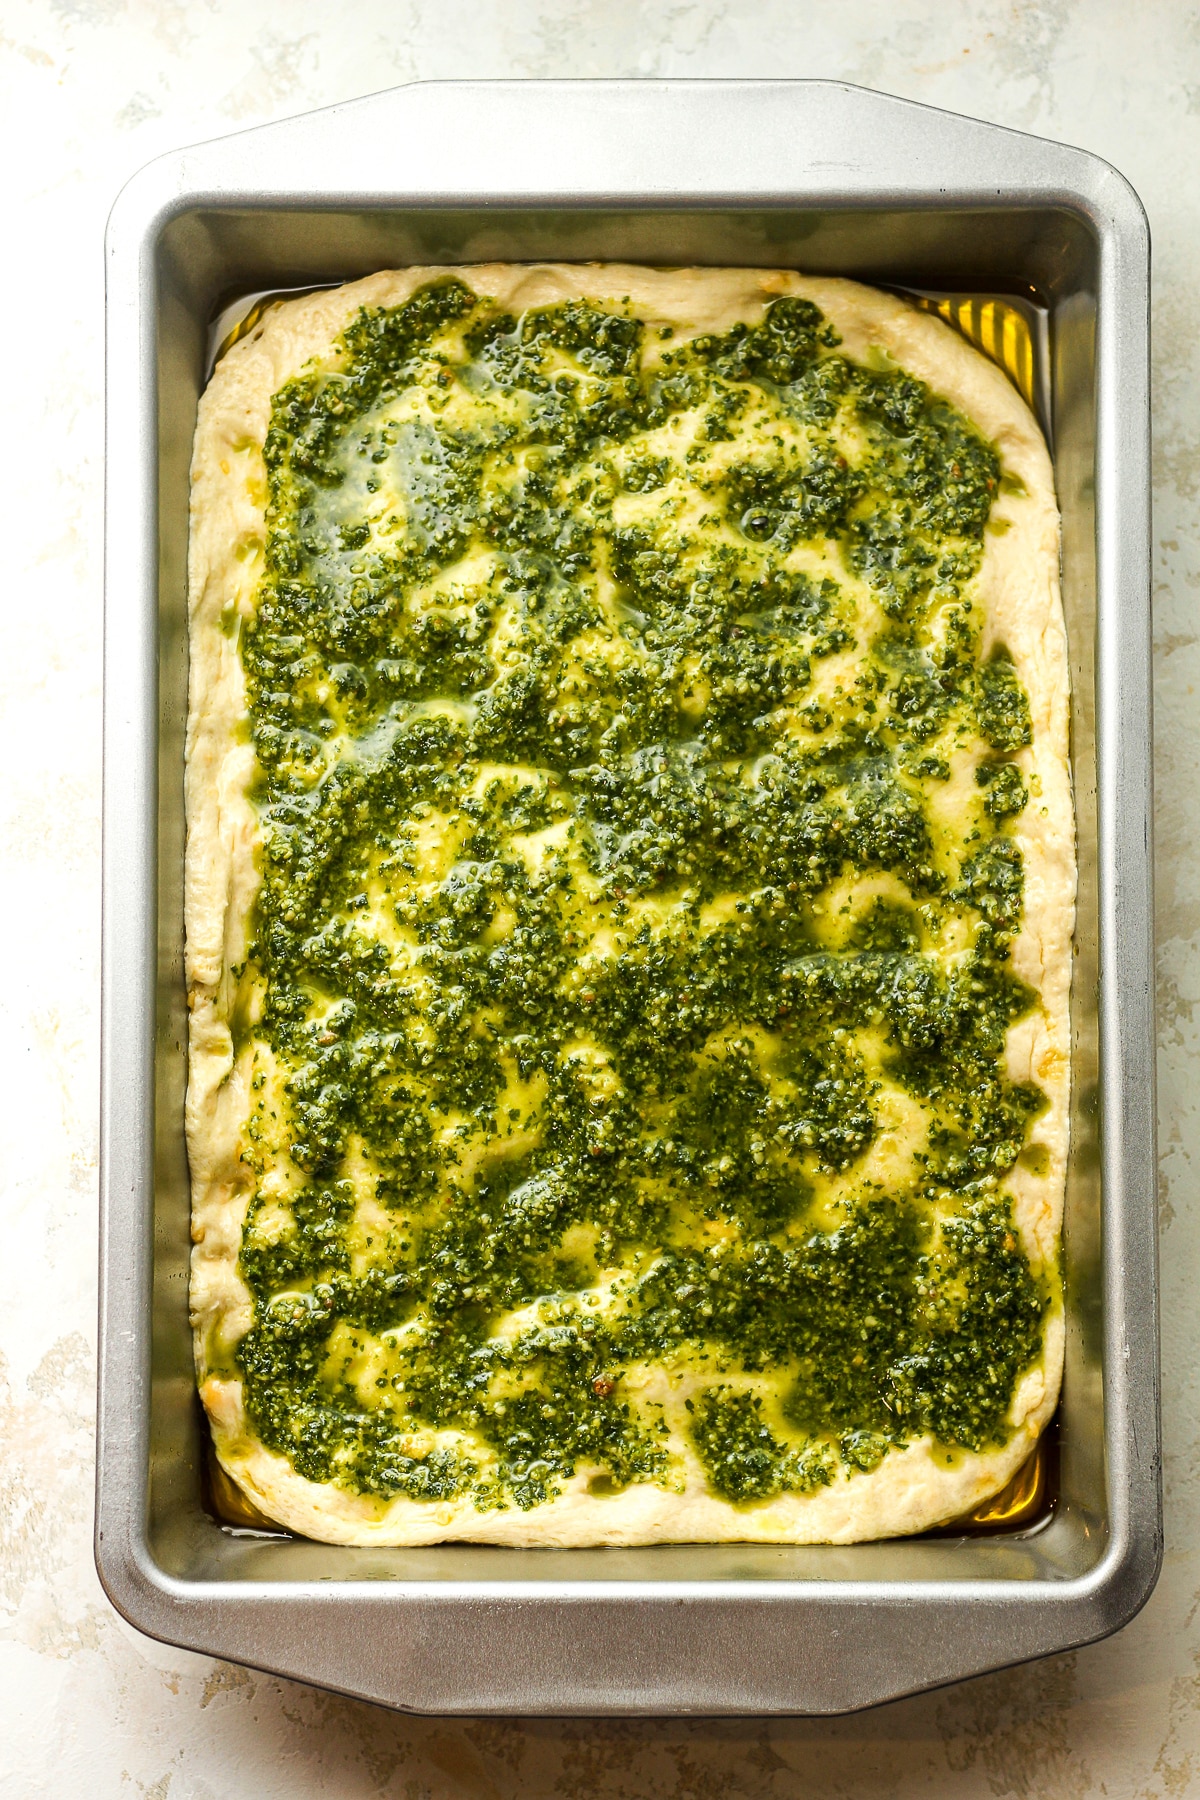 A pan of the focaccia dough with pesto sauce on top.